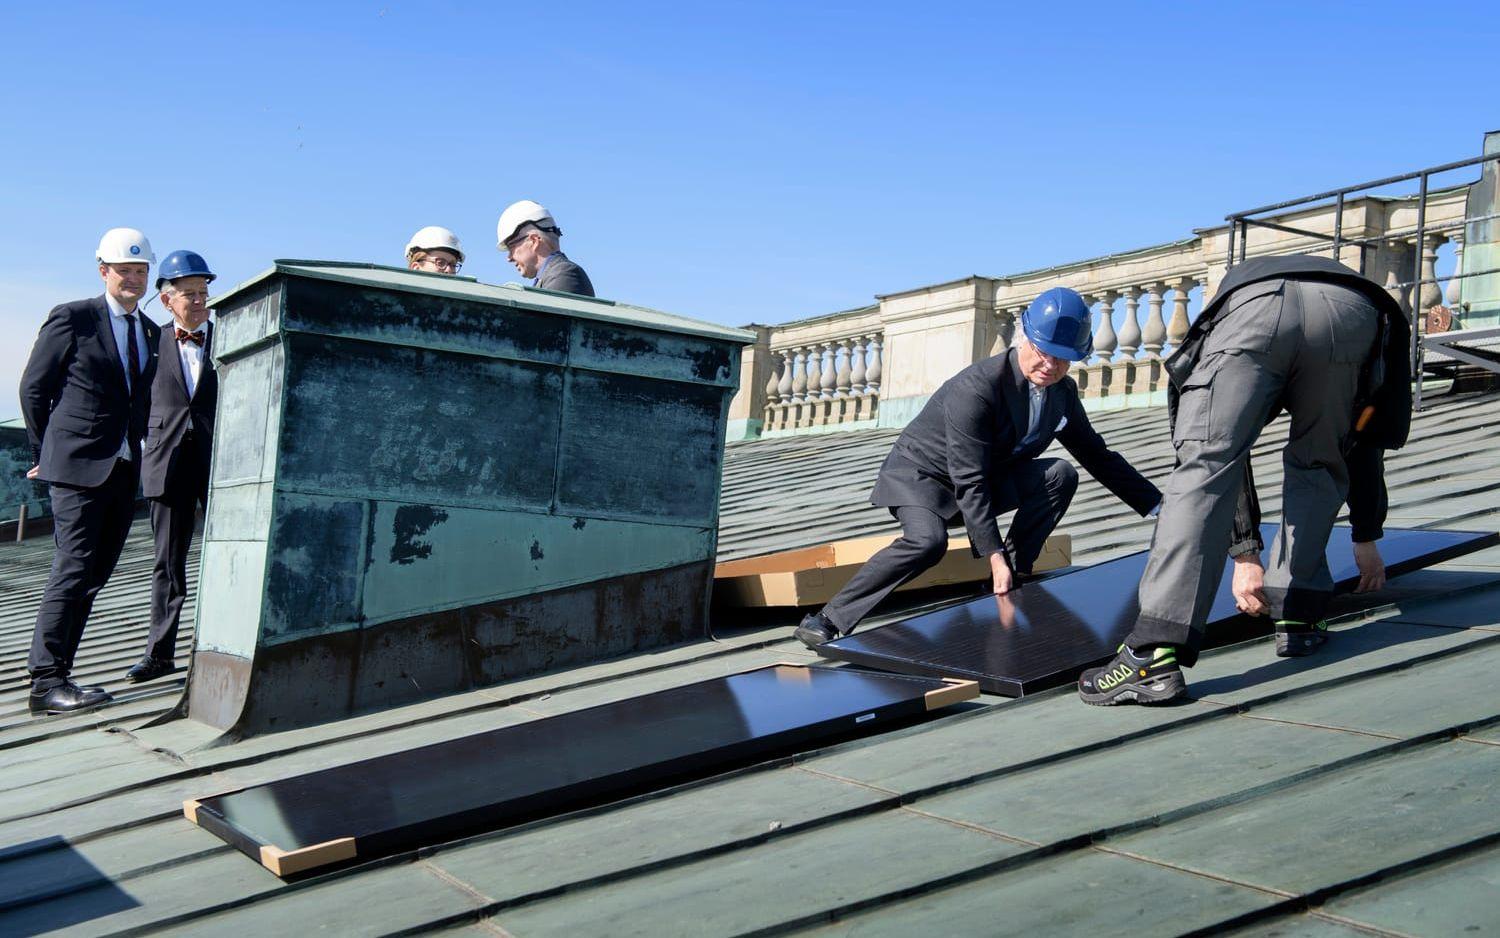 Totalt installeras 600 solcellspaneler på en yta av 1 000 kvadratmeter.